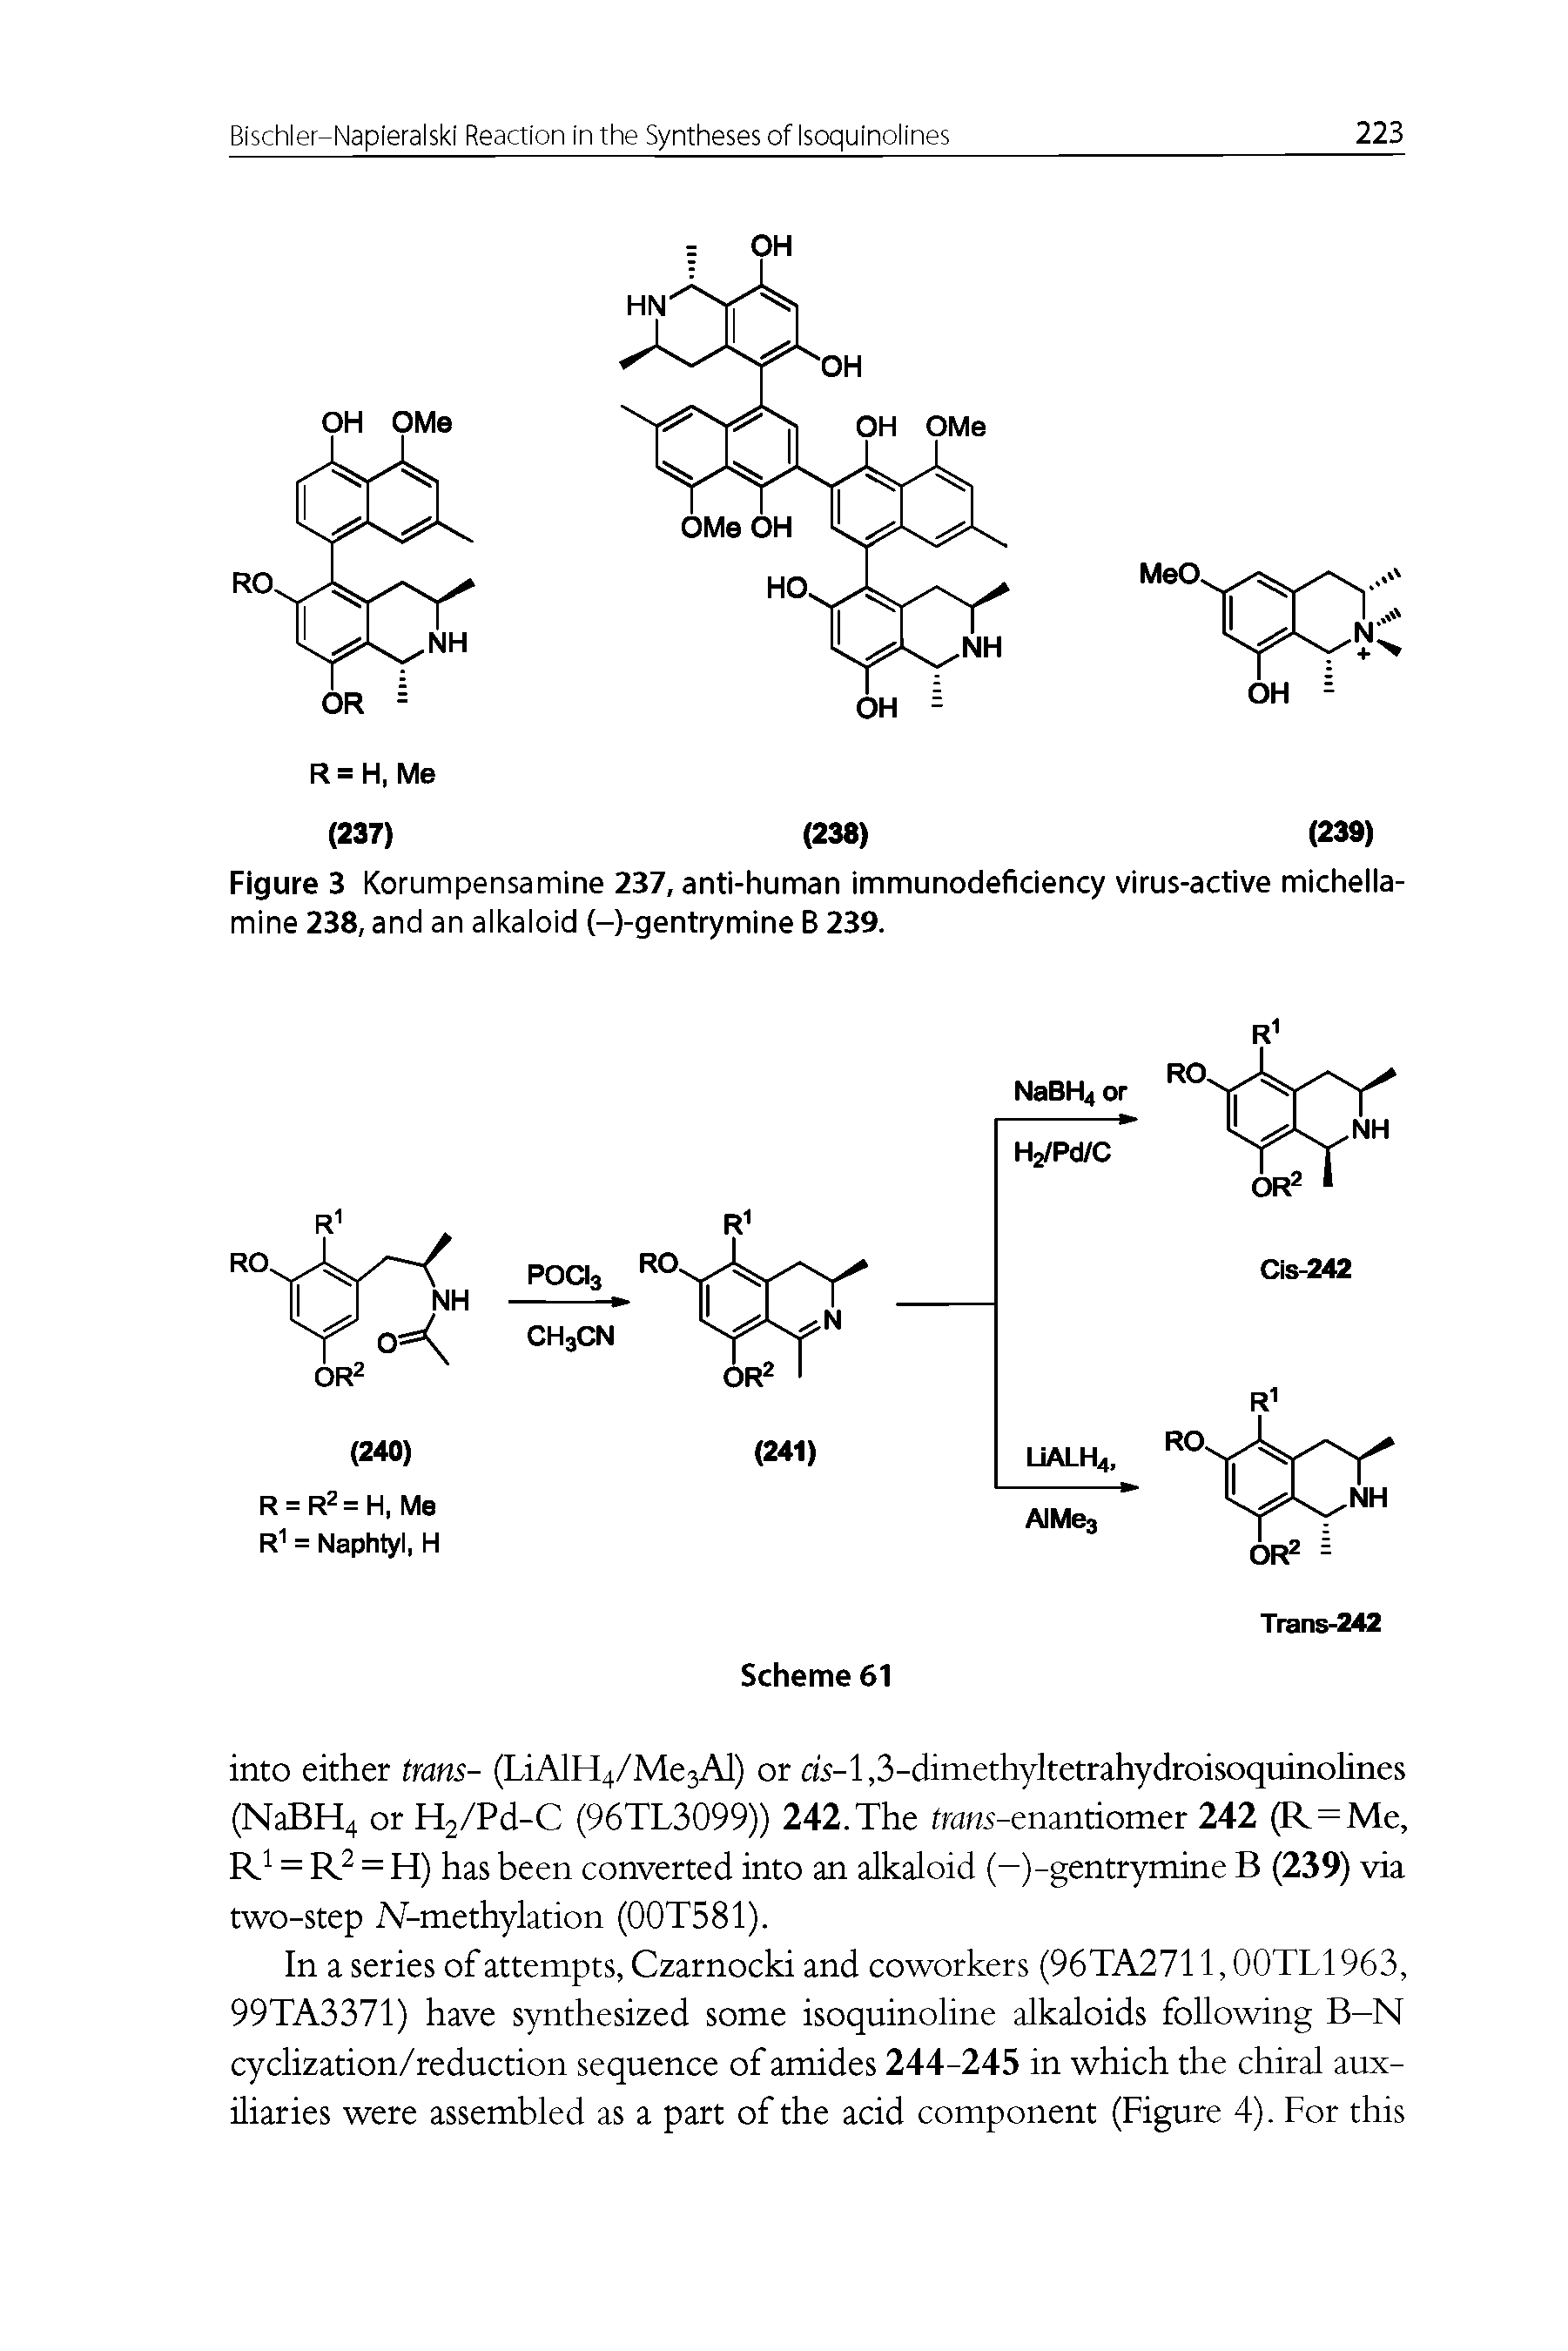 Figure 3 Korumpensamine 237, anti-human immunodeficiency virus-active michella-mine 238, and an alkaloid (-)-gentrymine B 239.